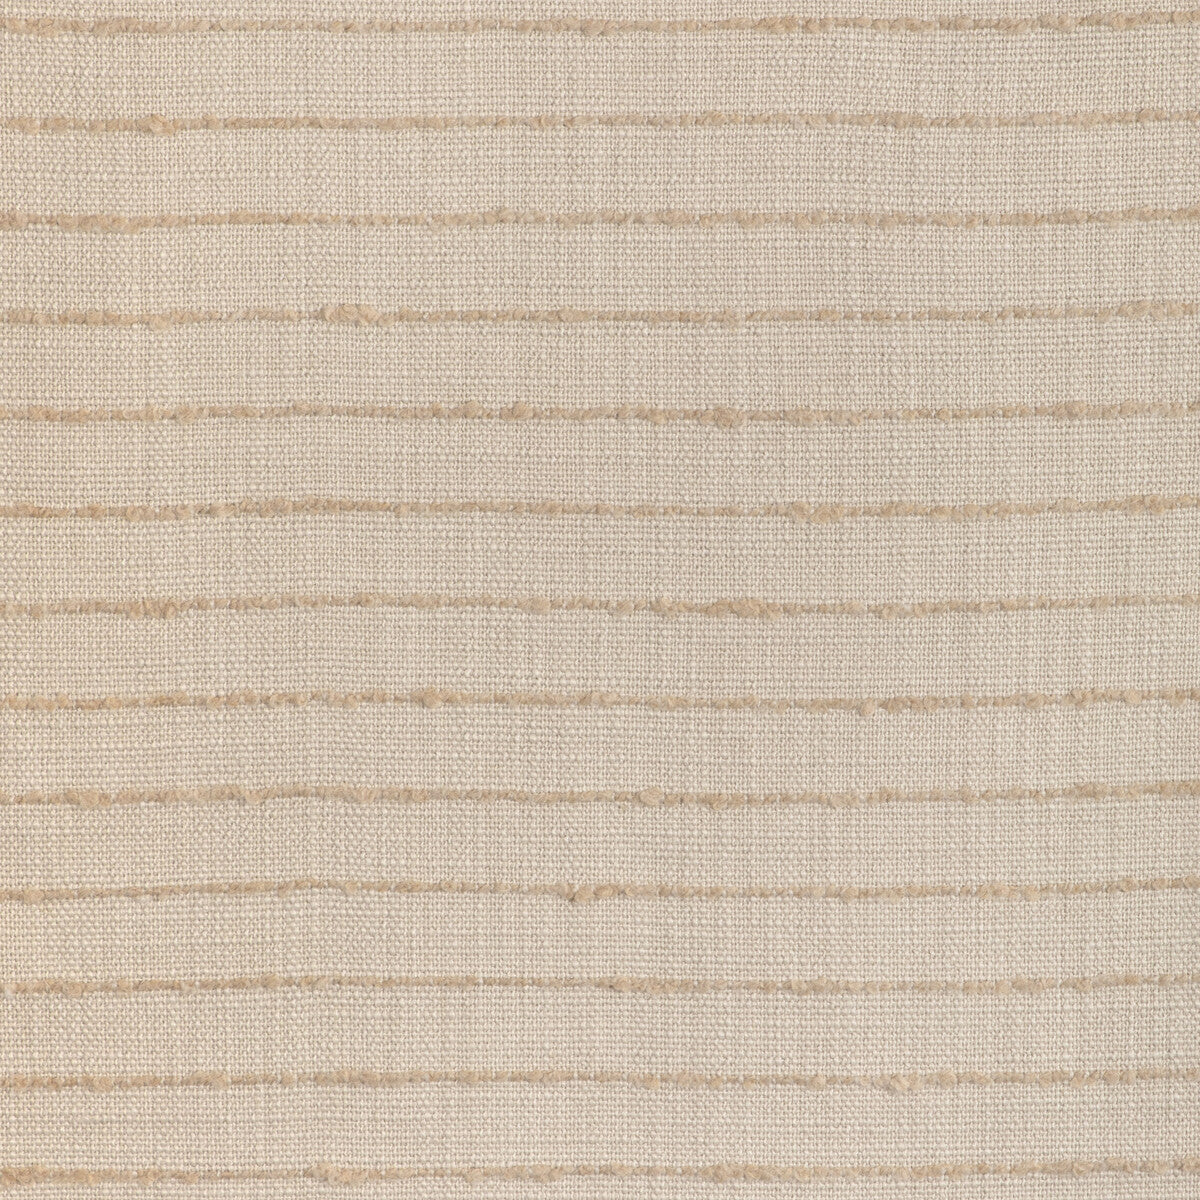 Les Vignes Stripe fabric in linen color - pattern 8024116.16.0 - by Brunschwig &amp; Fils in the Les Ensembliers L&